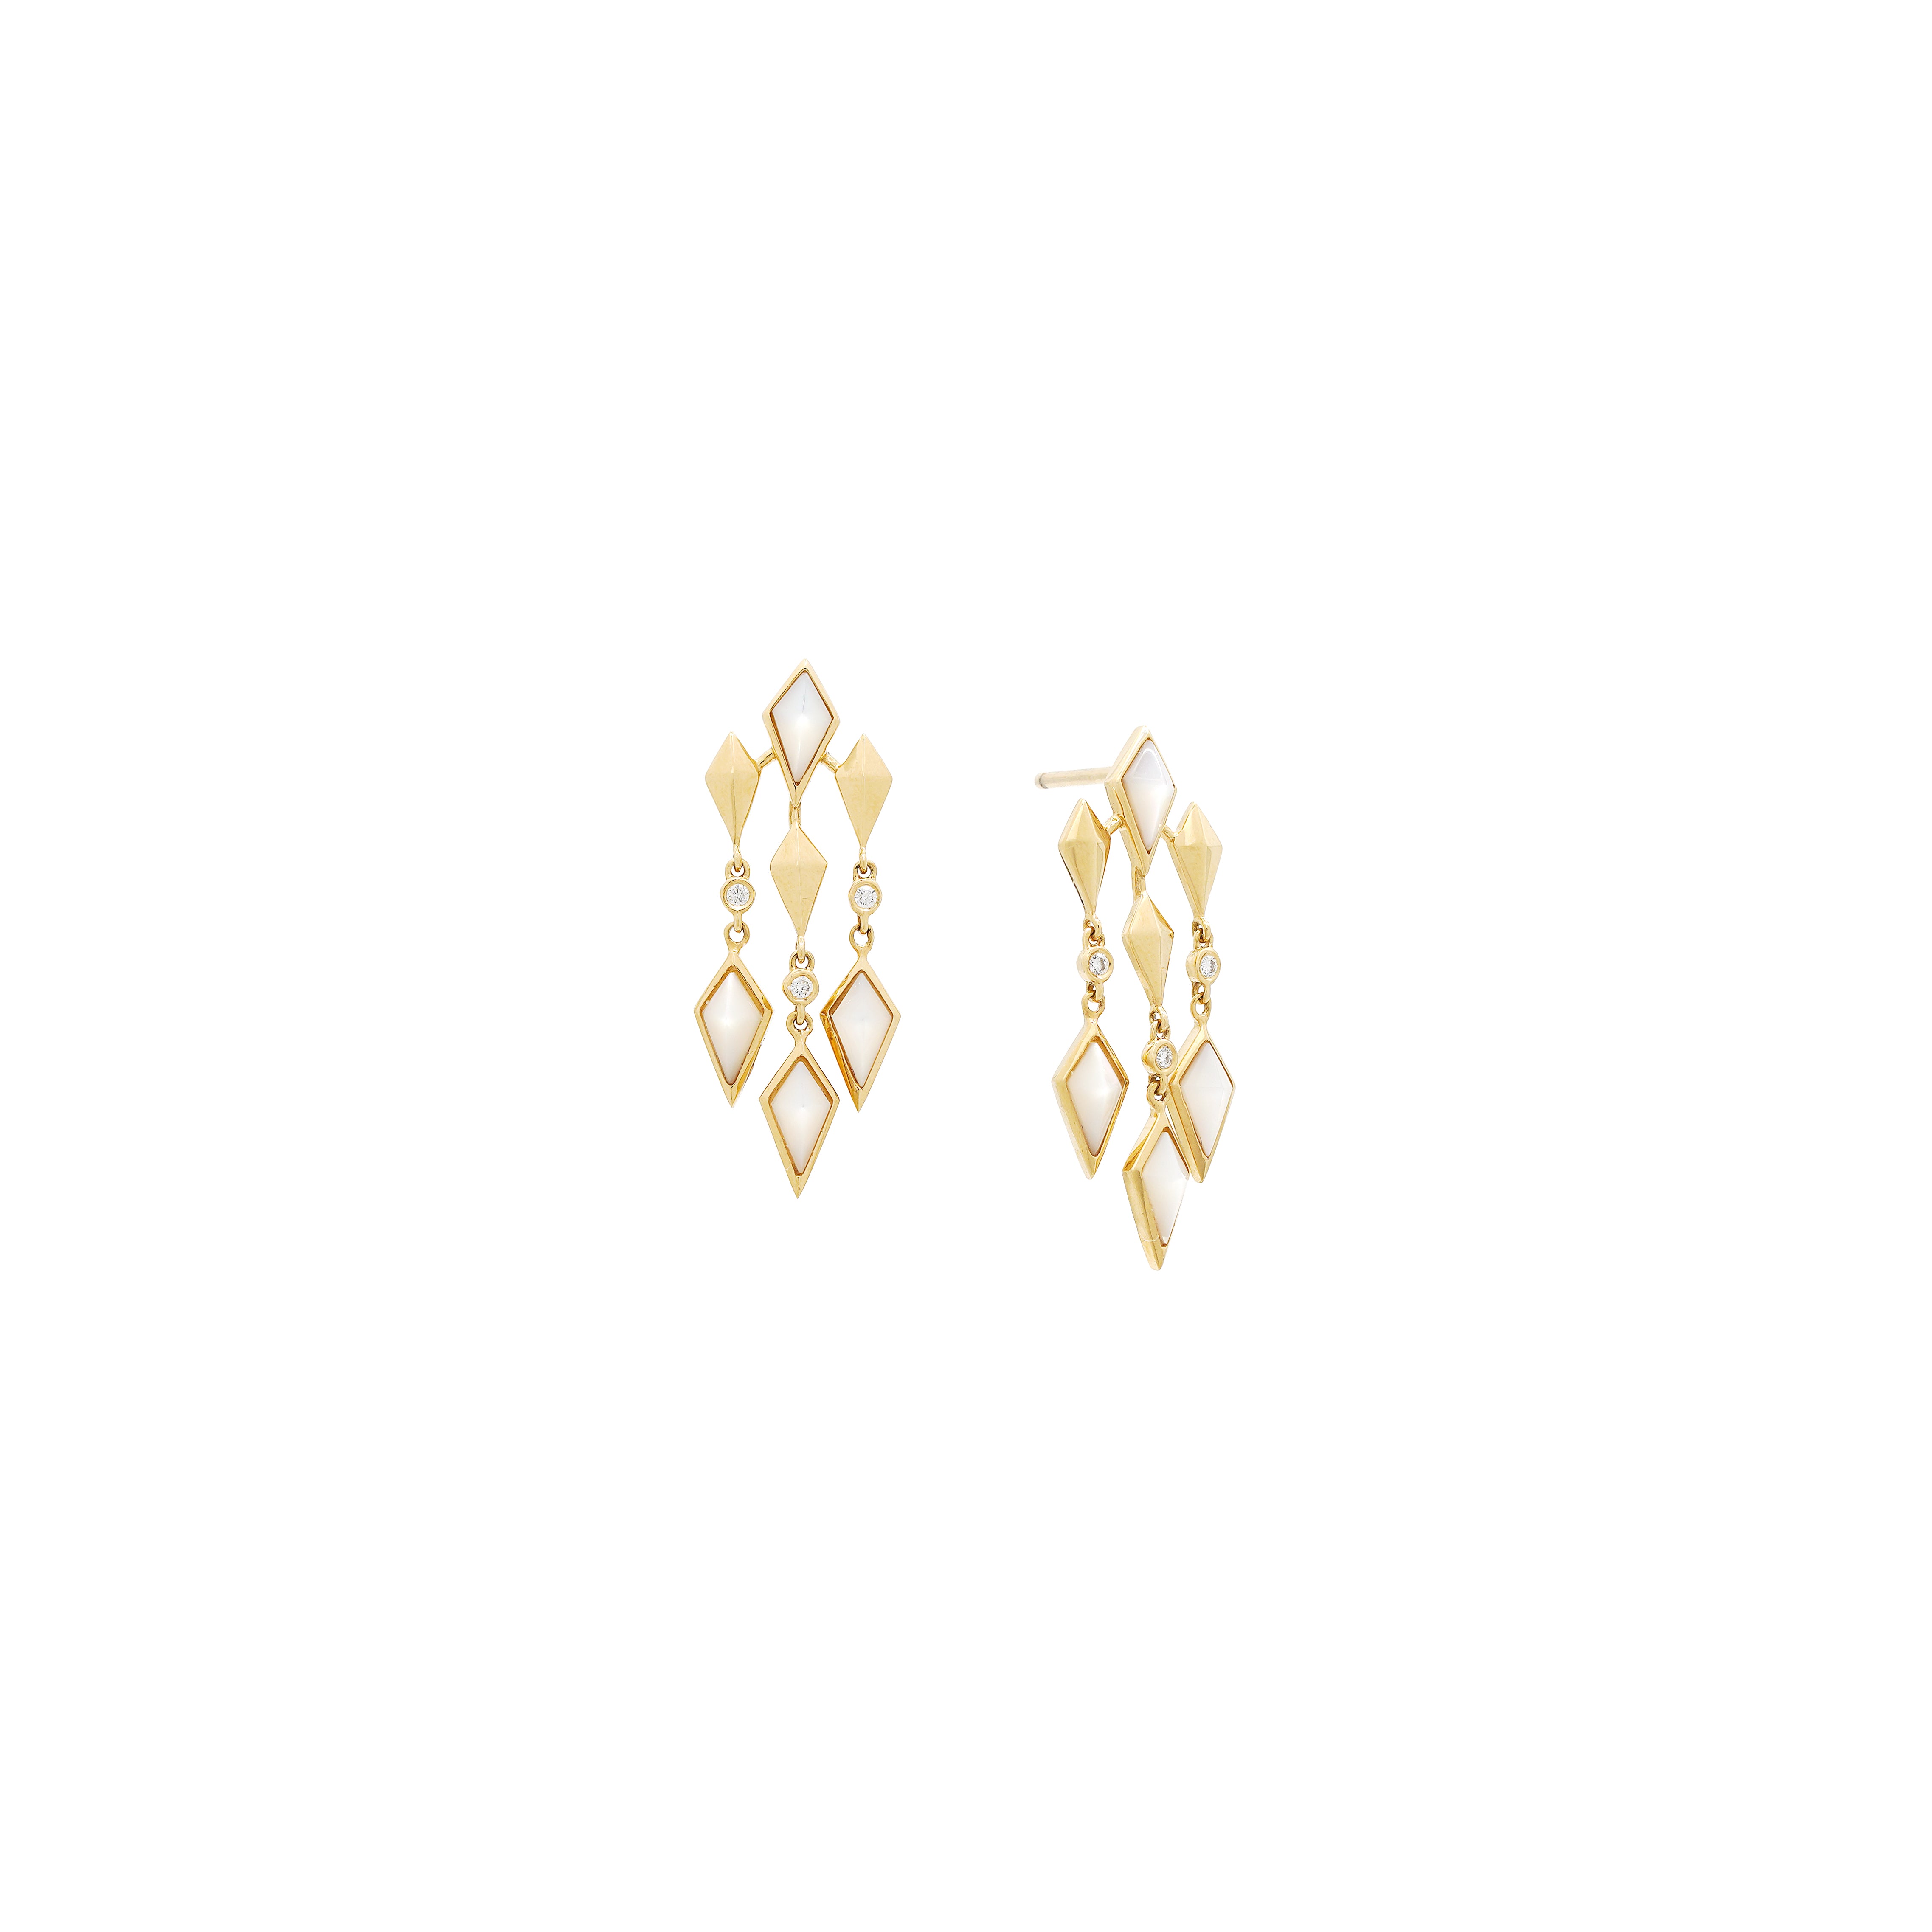 Al Merta’shah Earrings in Diamonds and Mother of Pearl